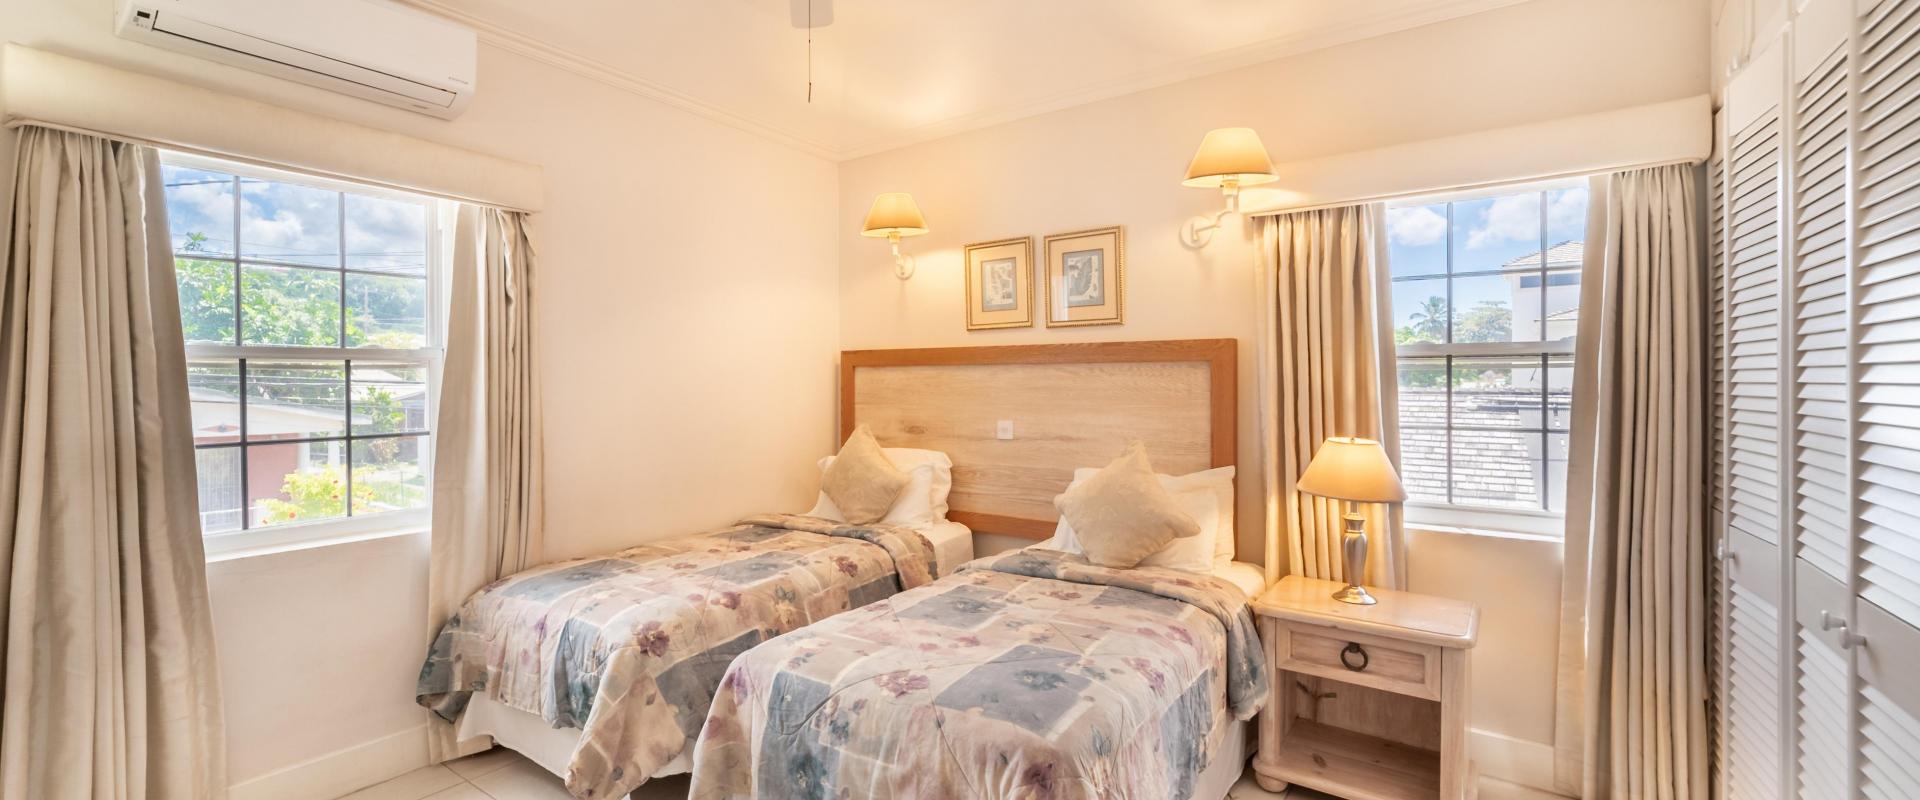 Barbados Beachfront Vacation Rental Villa Seawards Bedroom 3 With Twin Beds